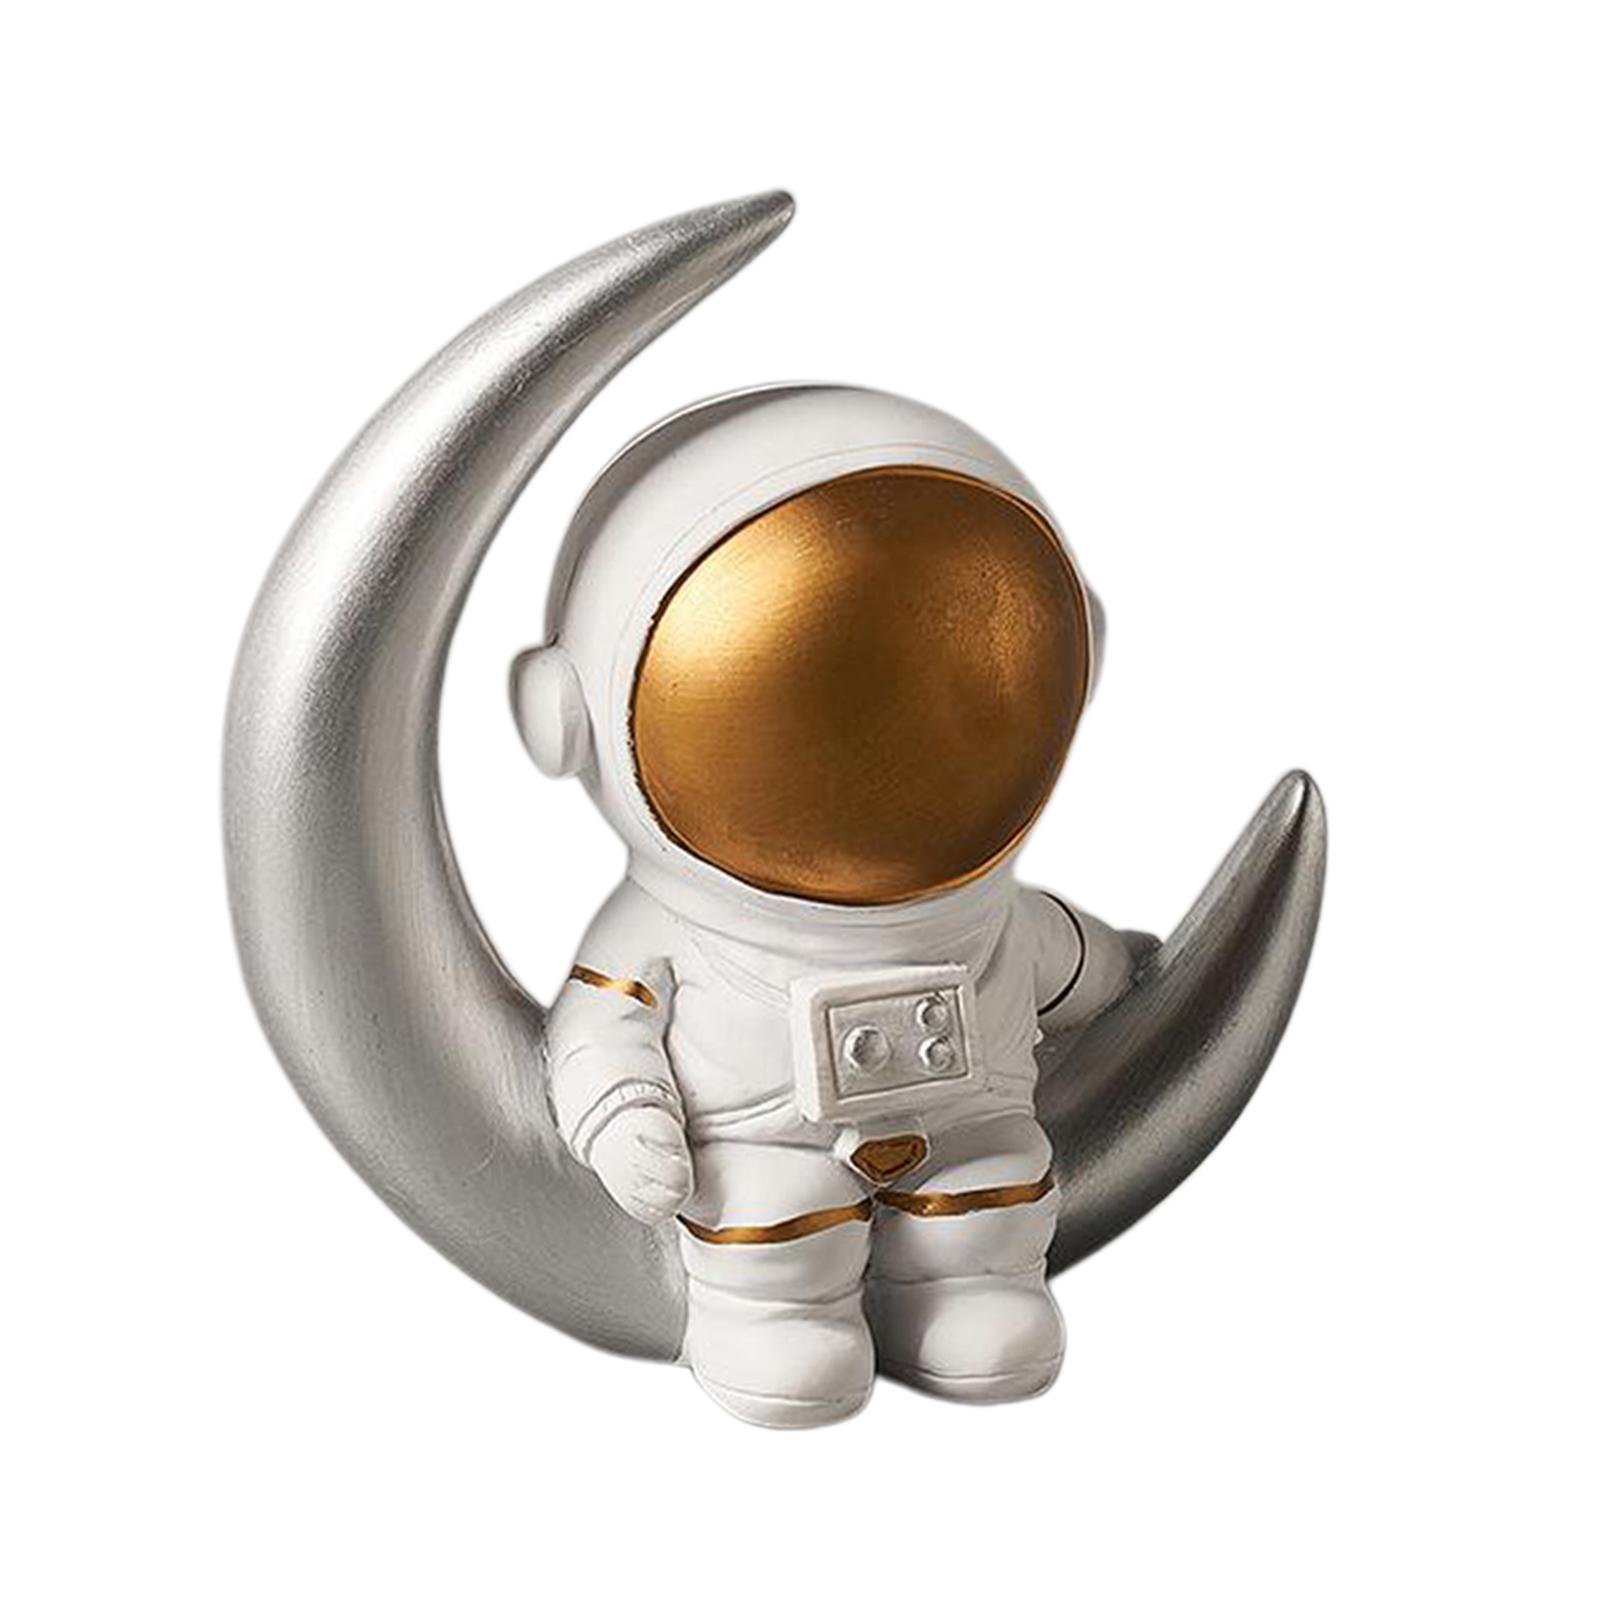 Astronaut Statue Figurine Sculpture Desktop Home Decor Sitting on the moon